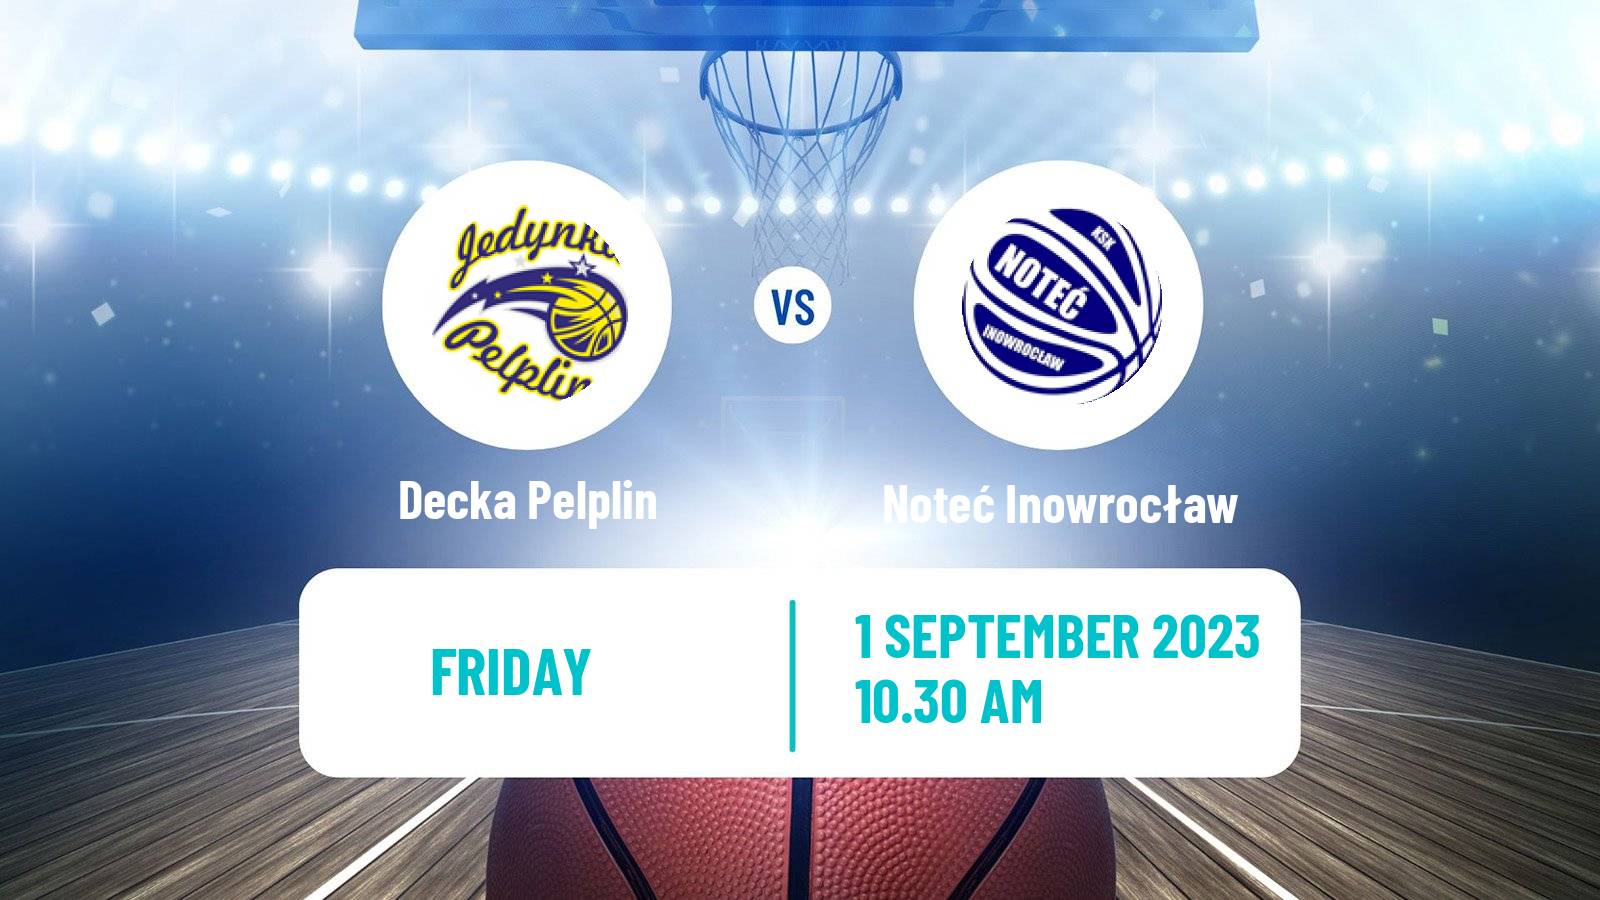 Basketball Club Friendly Basketball Decka Pelplin - Noteć Inowrocław